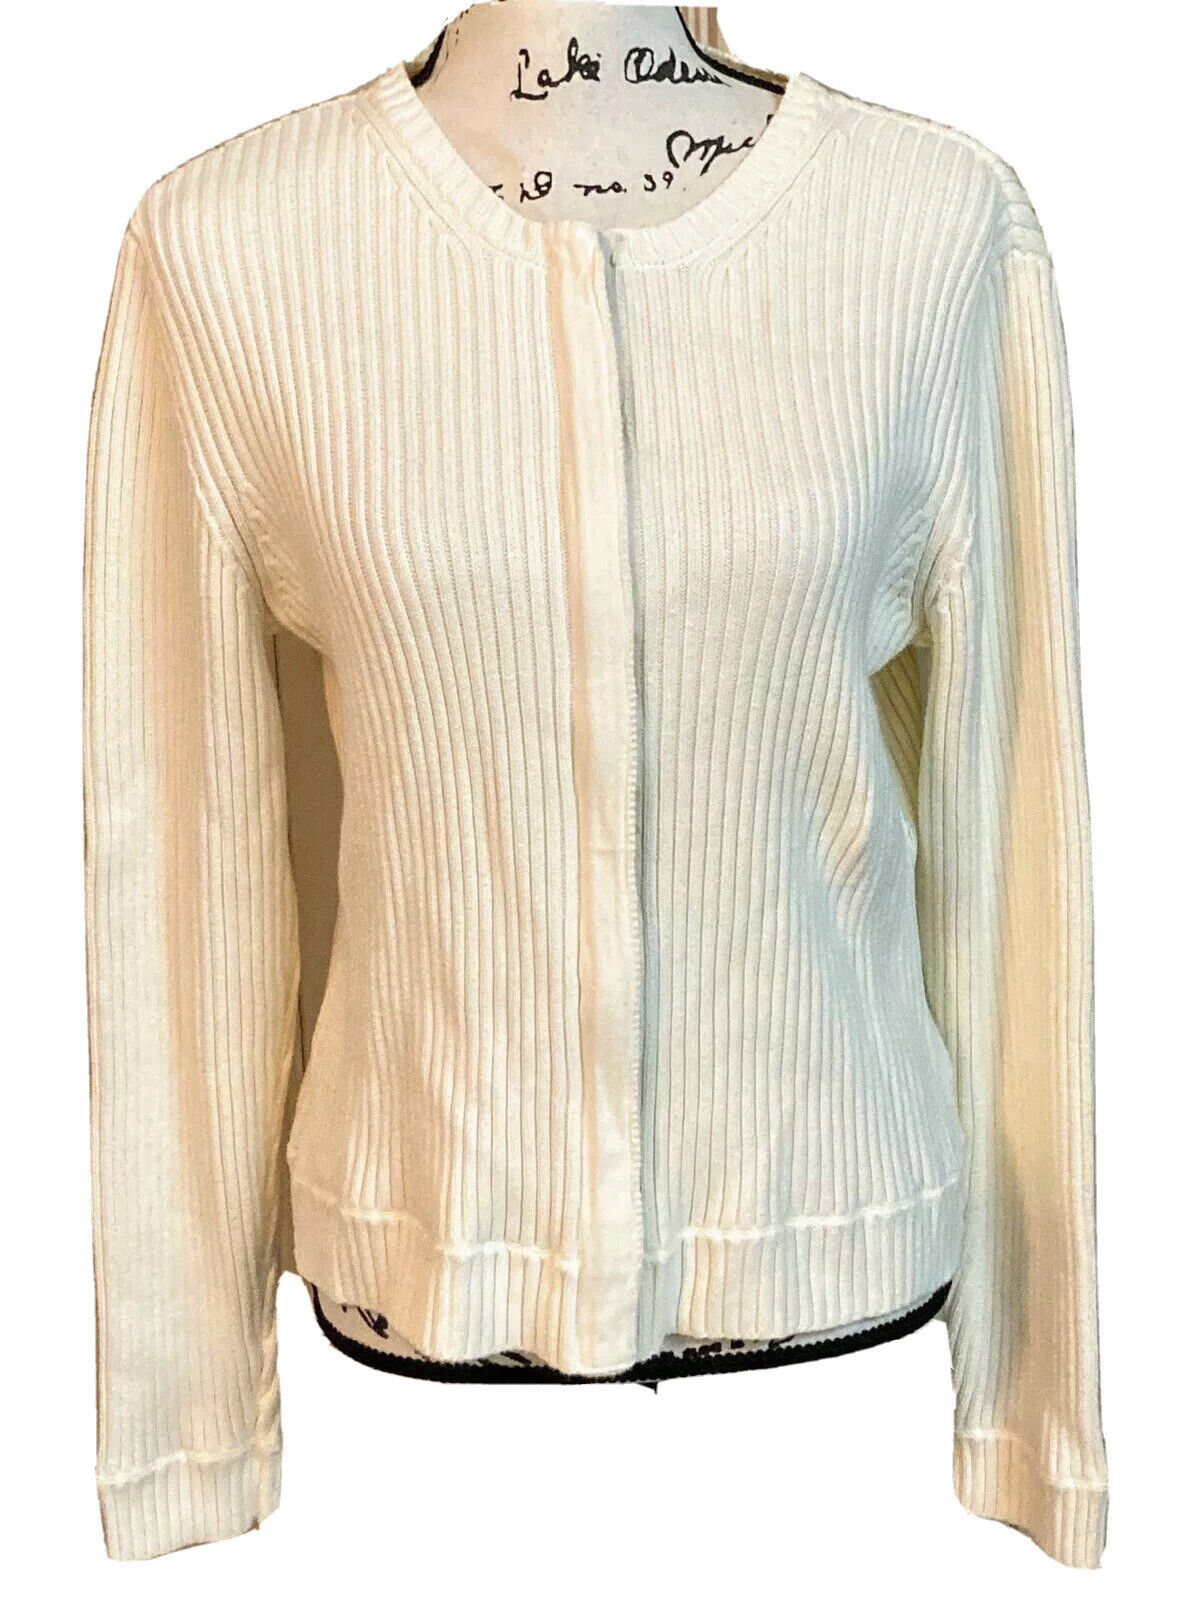 Tommy Hilfiger Cardigan Cable Knit Sweater Top Full Zip Women's Sz XL Cream  EUC | eBay